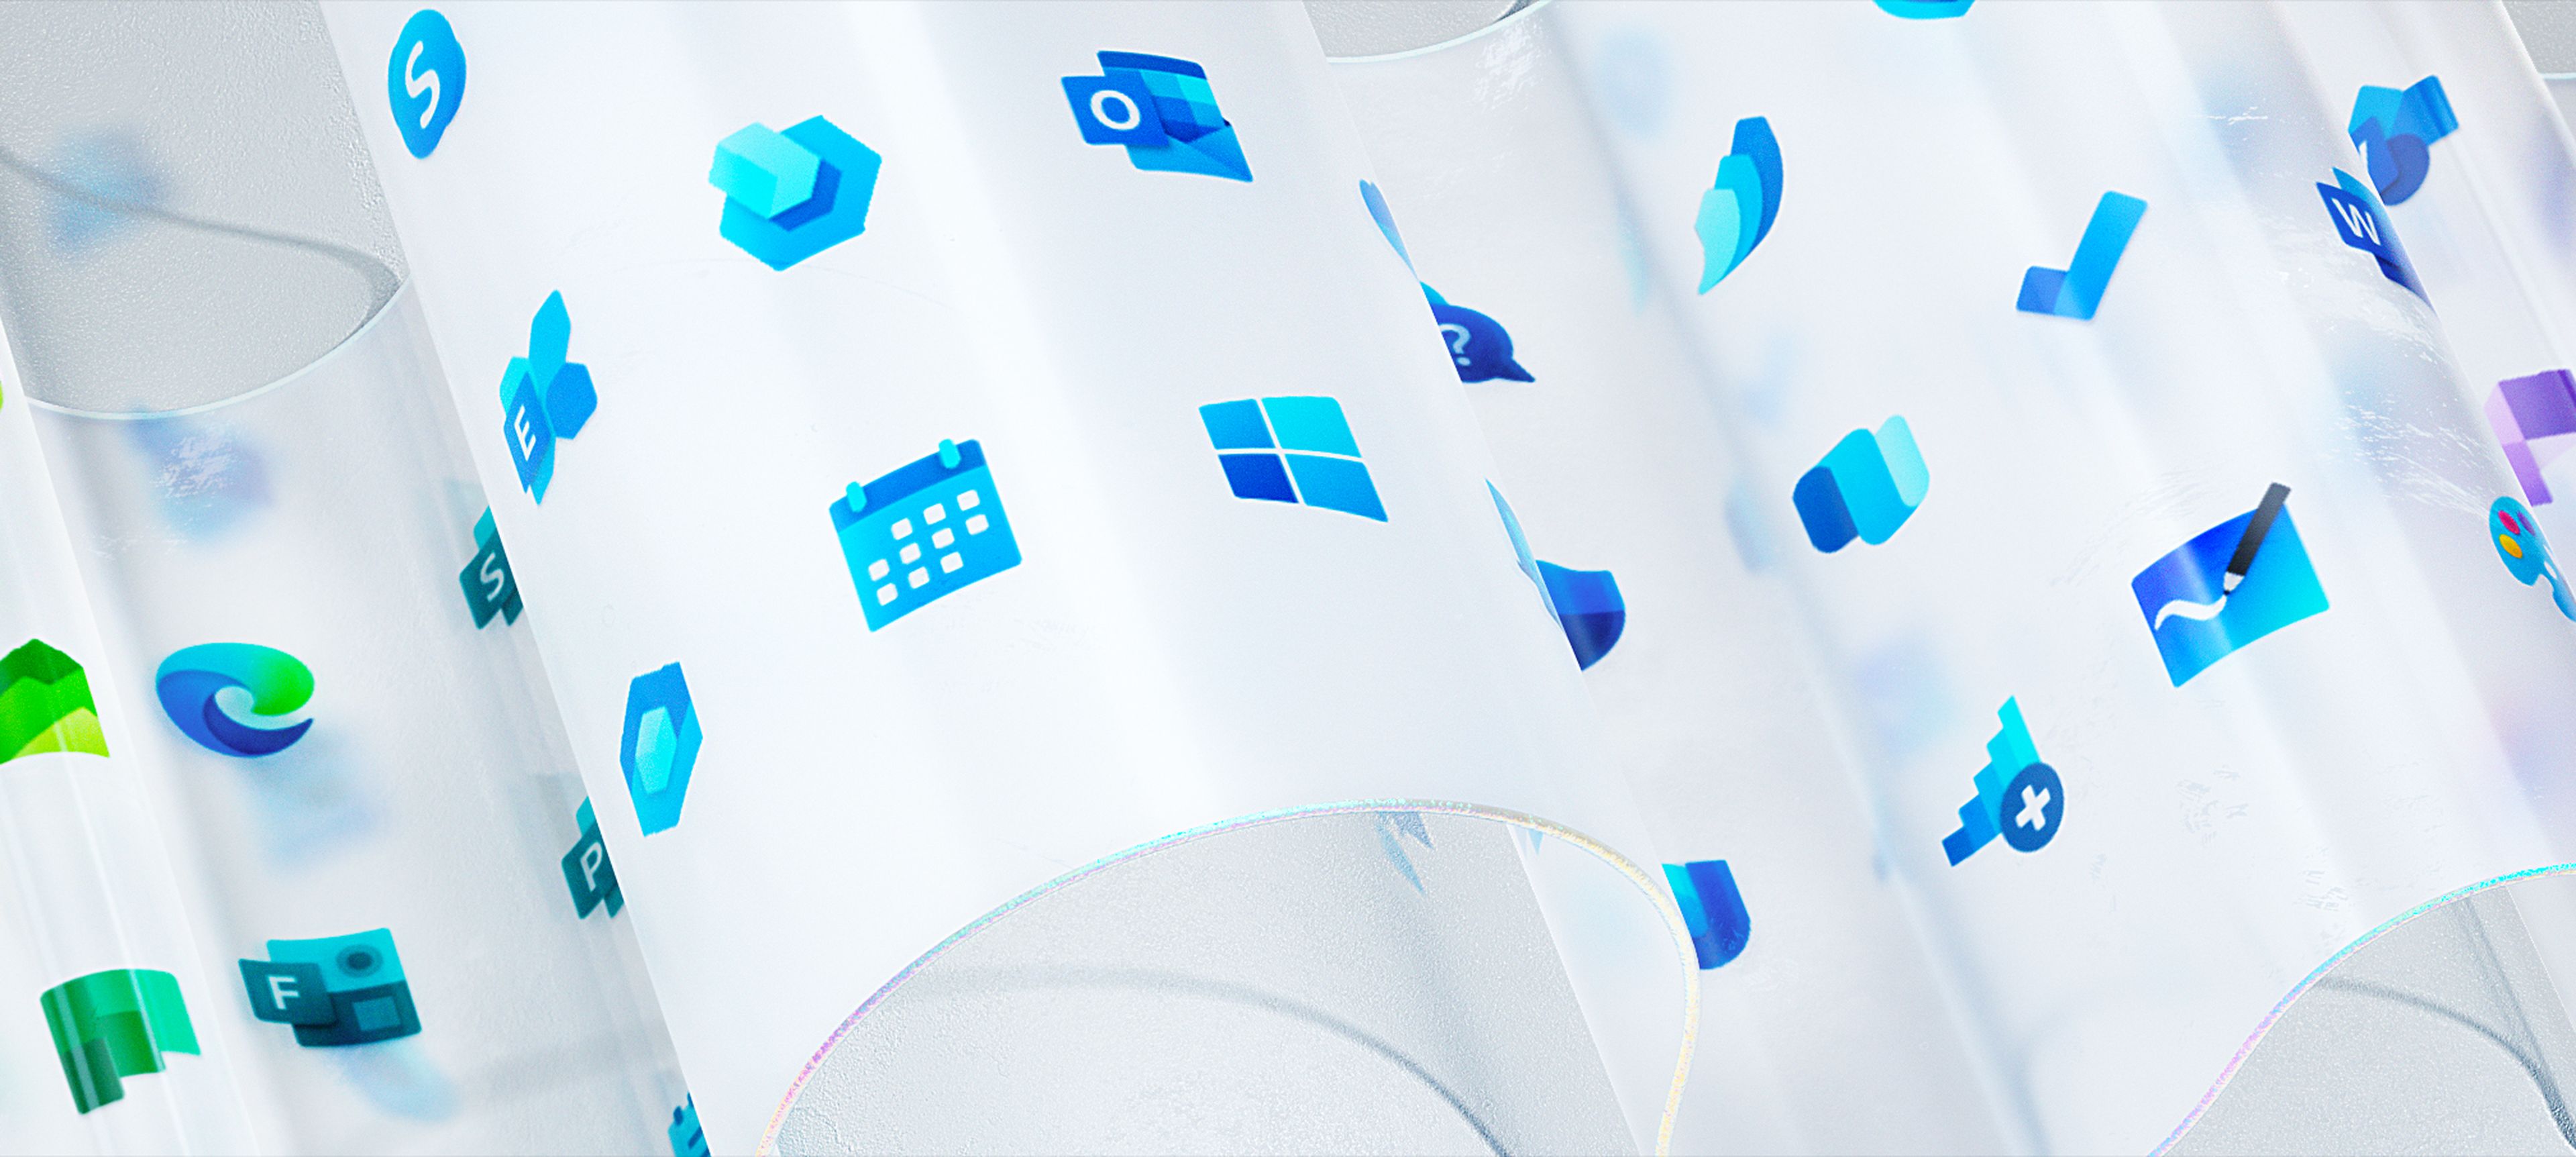 Nuevo logo Windows 10